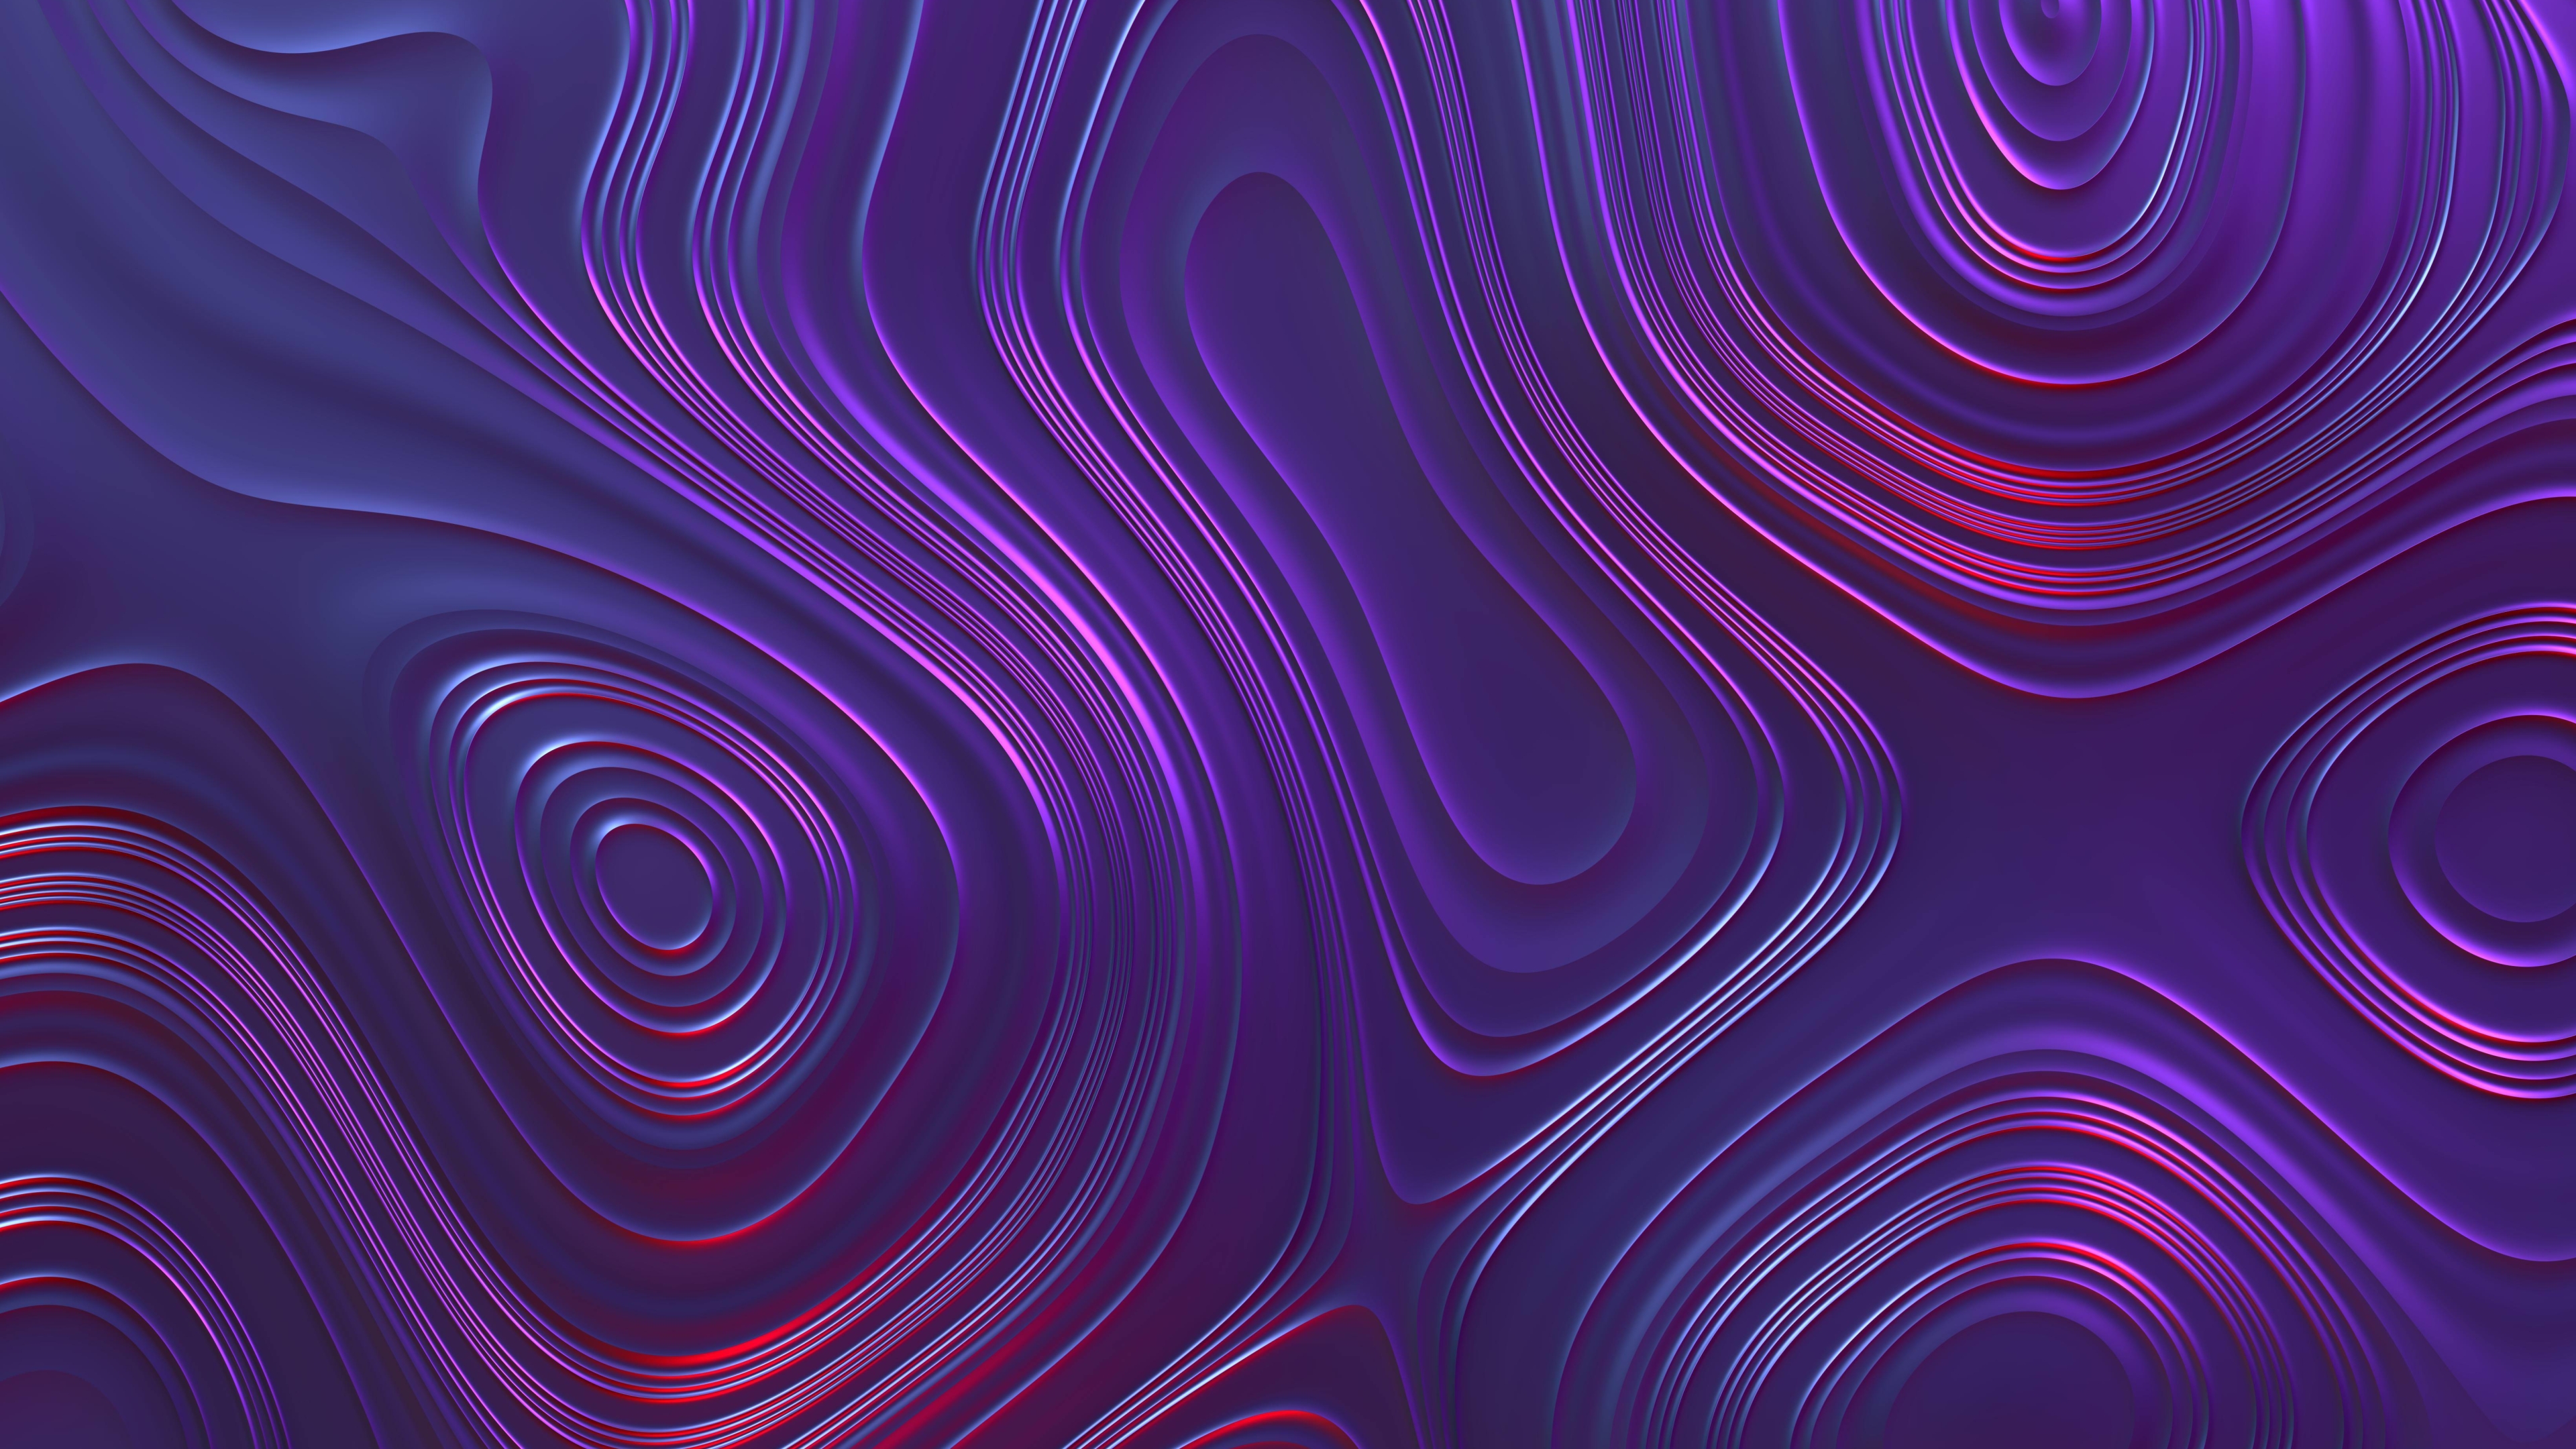 3840x2160 Purple Oval Waves 4K Wallpaper, HD Abstract 4K Wallpapers